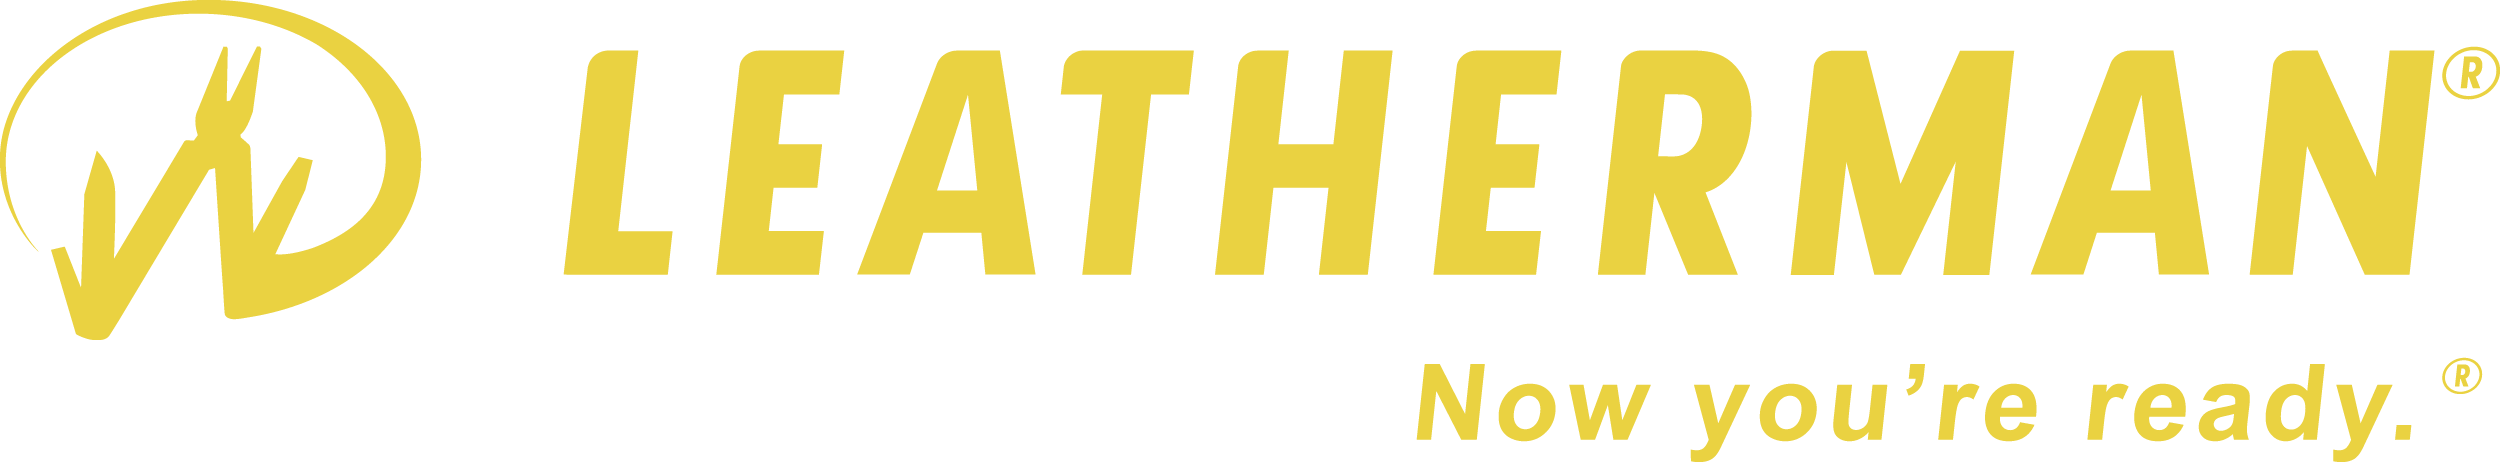 LEATHERMAN-logo.png